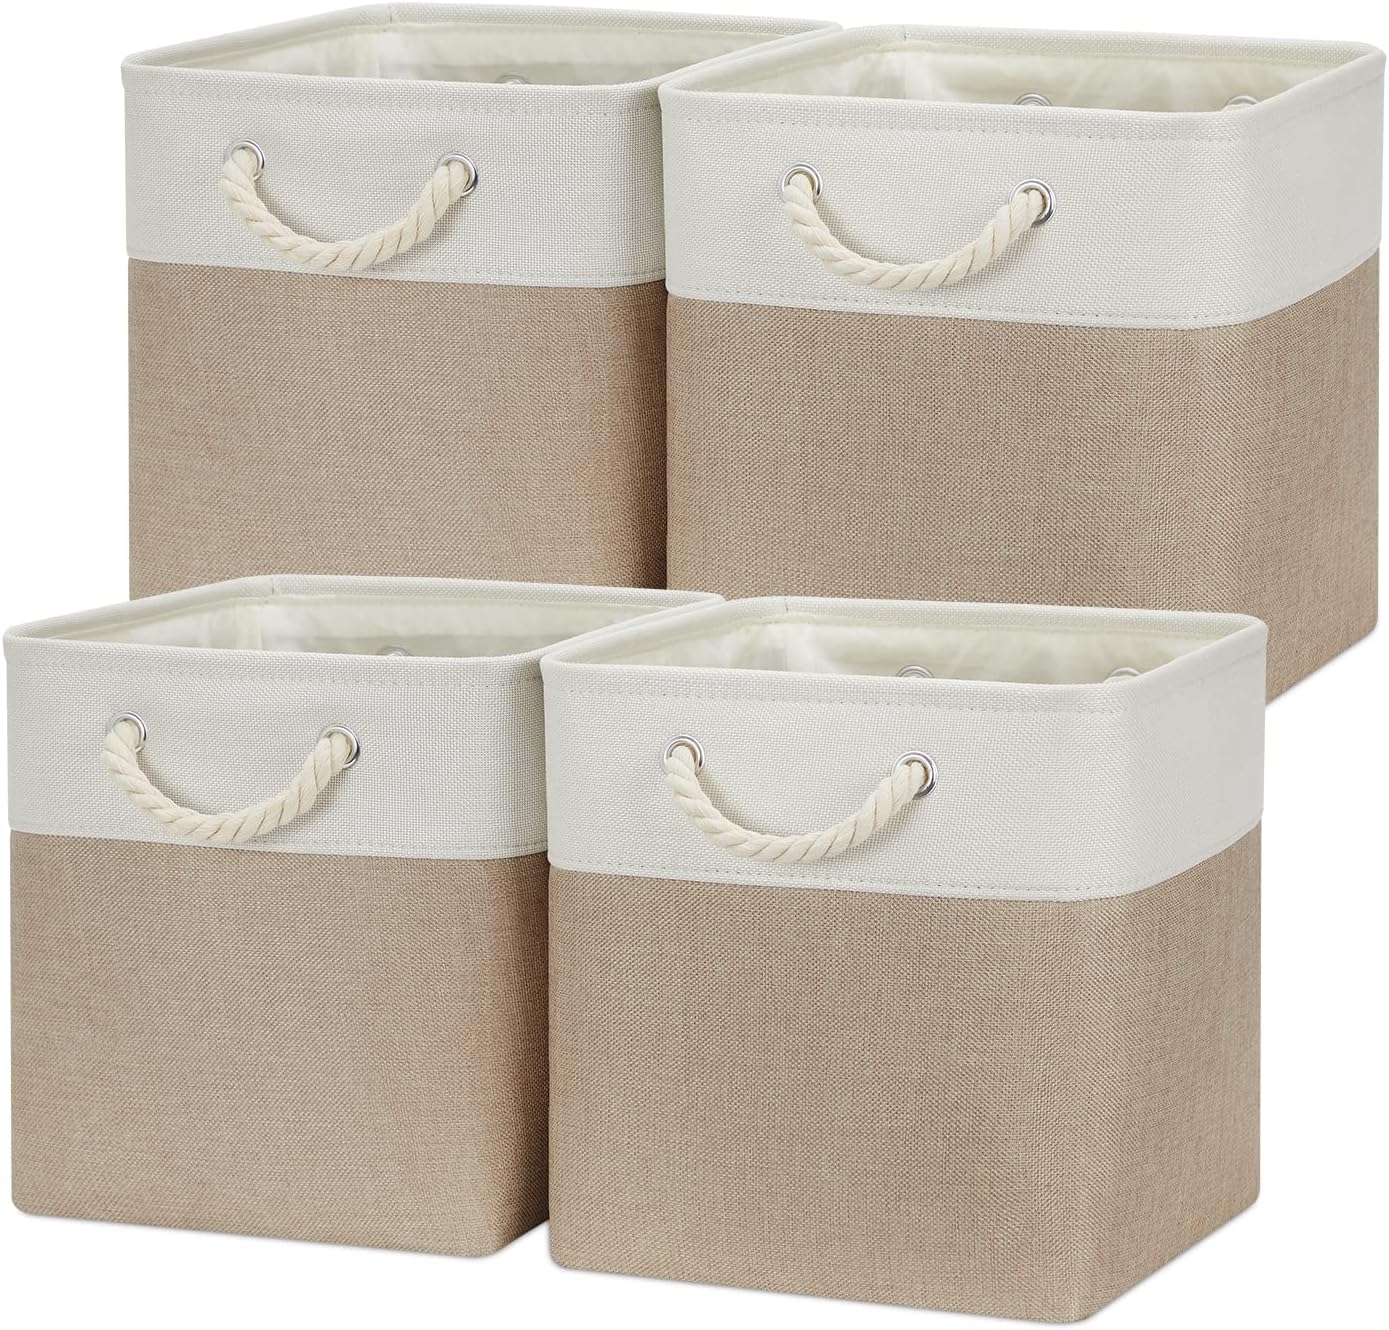 Temary 4 Pack Cube Storage Bins Cloth Baskets for Shelf, Fabric Storage Cubes 12 x 12 Baskets Gift Empty Toy Baskets for Kids, Dog Toy Baskets for Storage (White&Khaki)